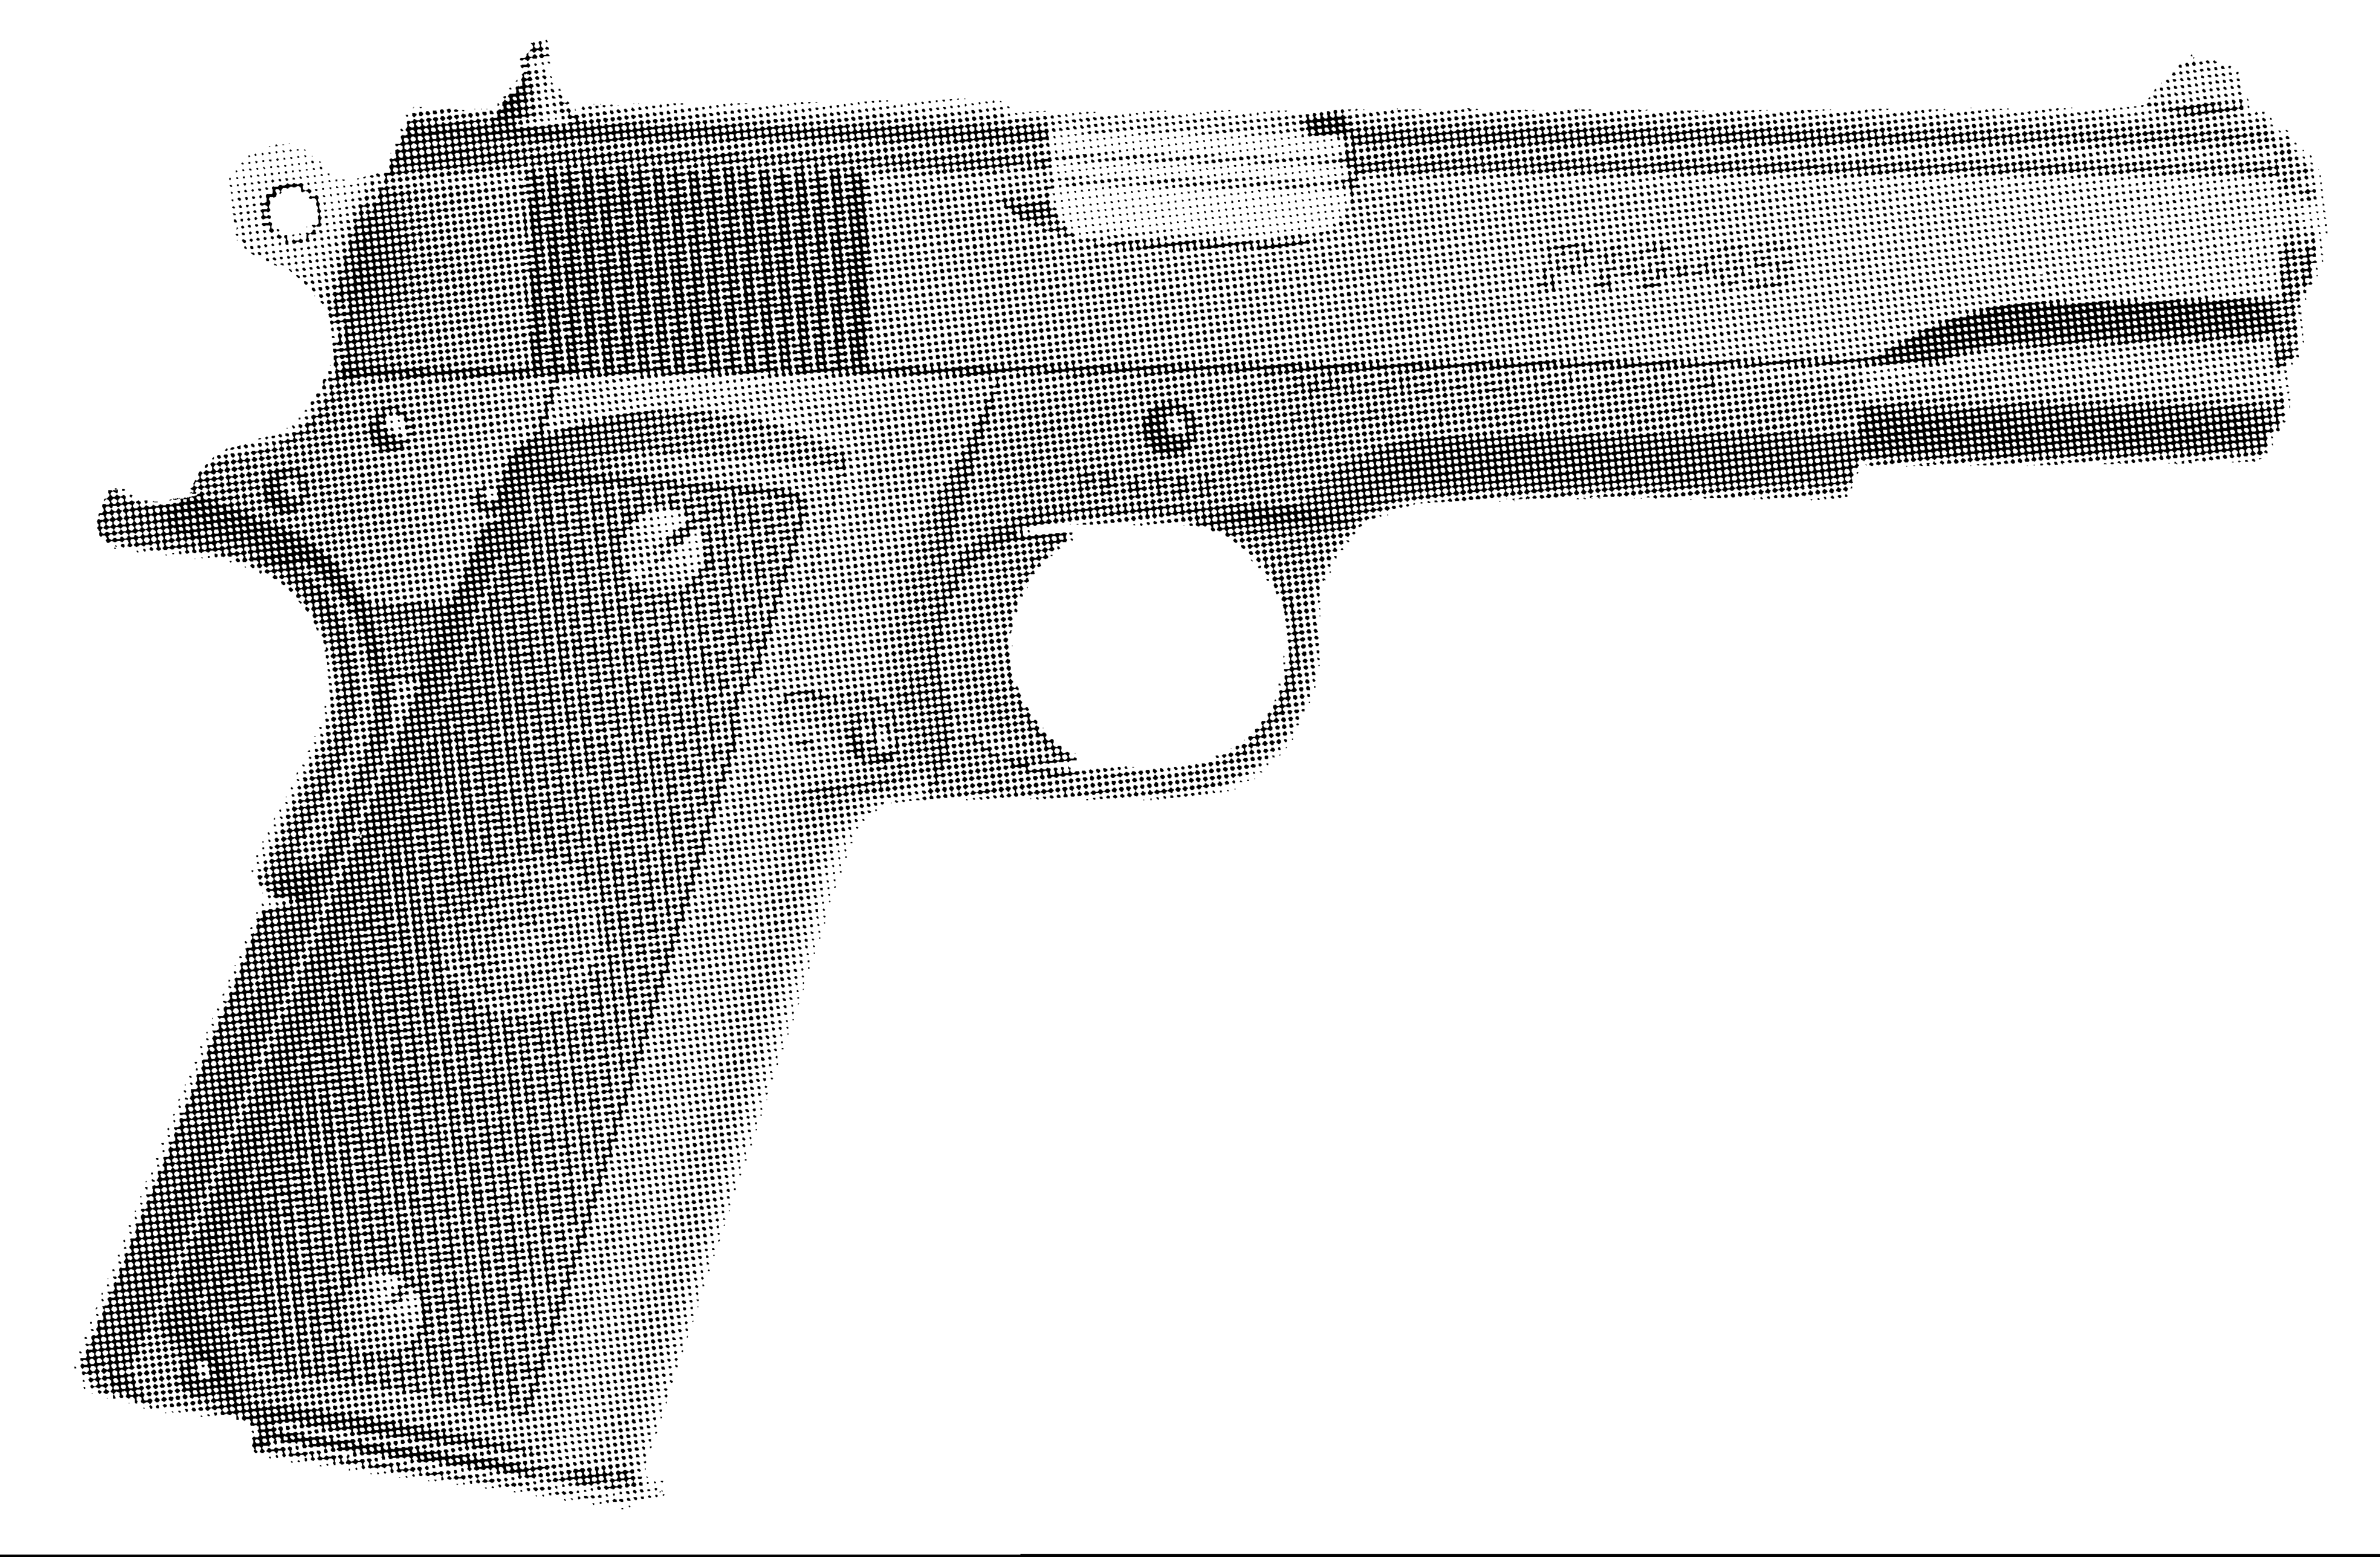 Model P14.45